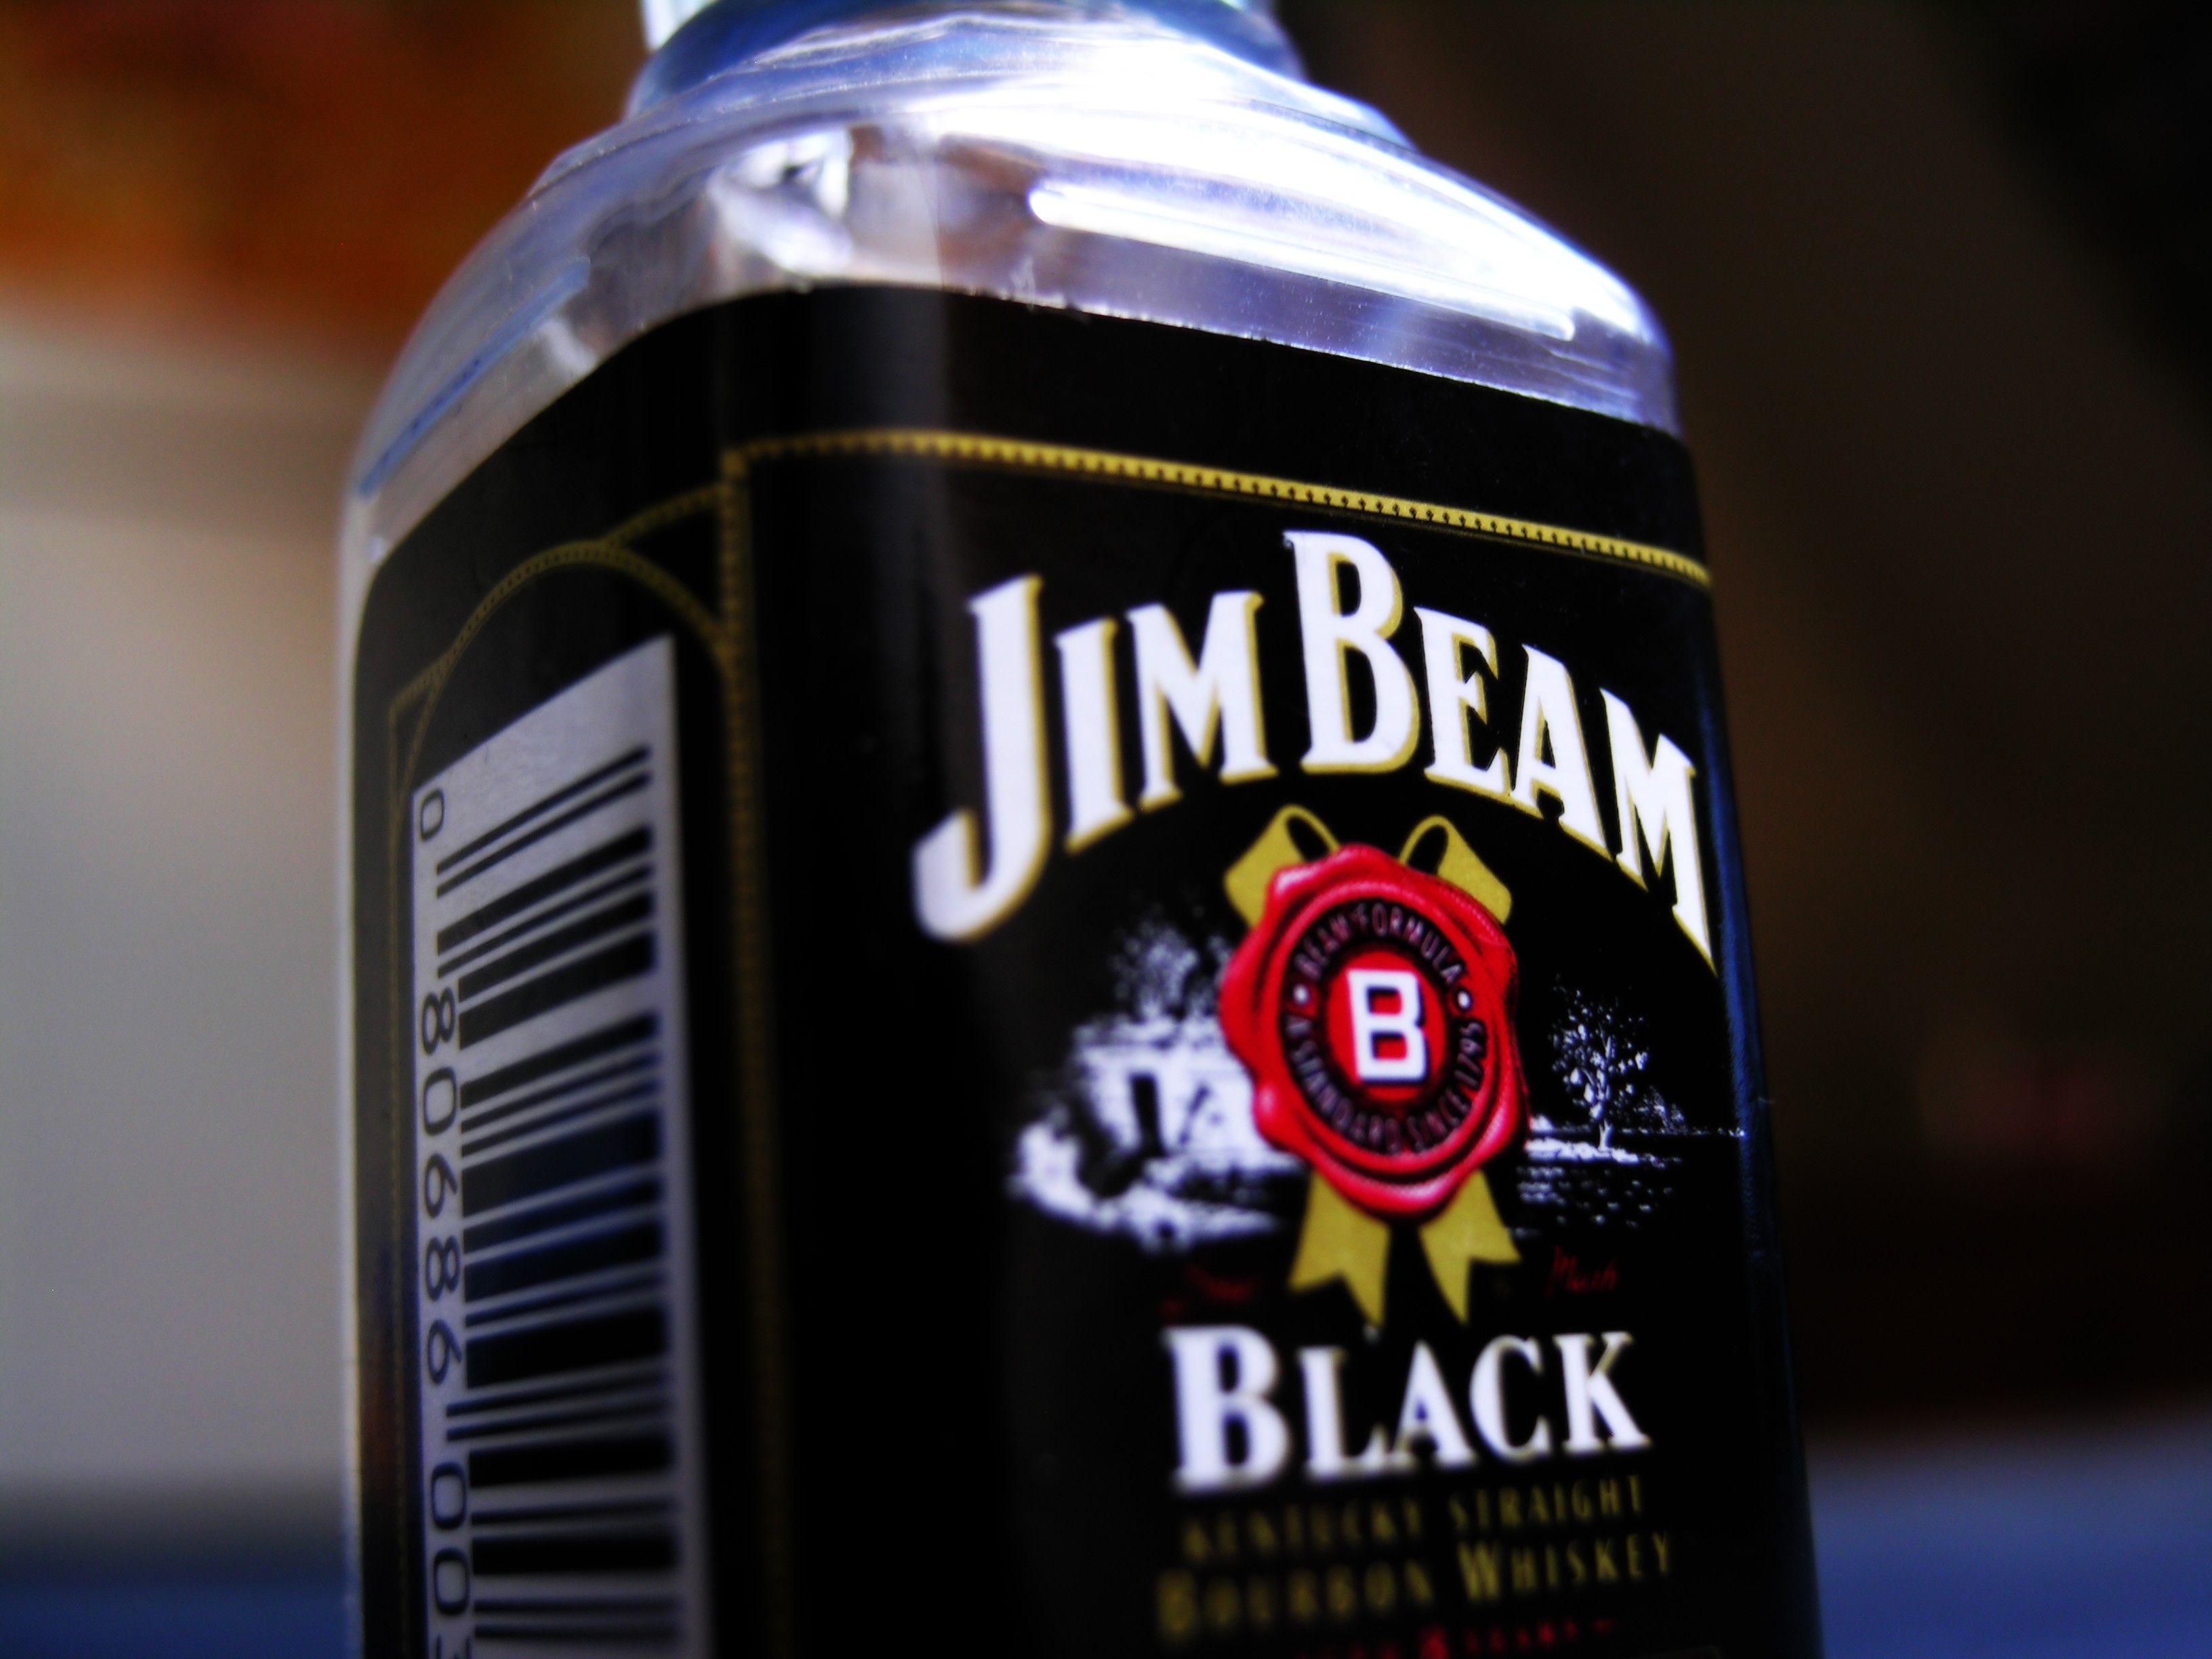 General 3264x2448 alcohol Jim Beam bottles brand